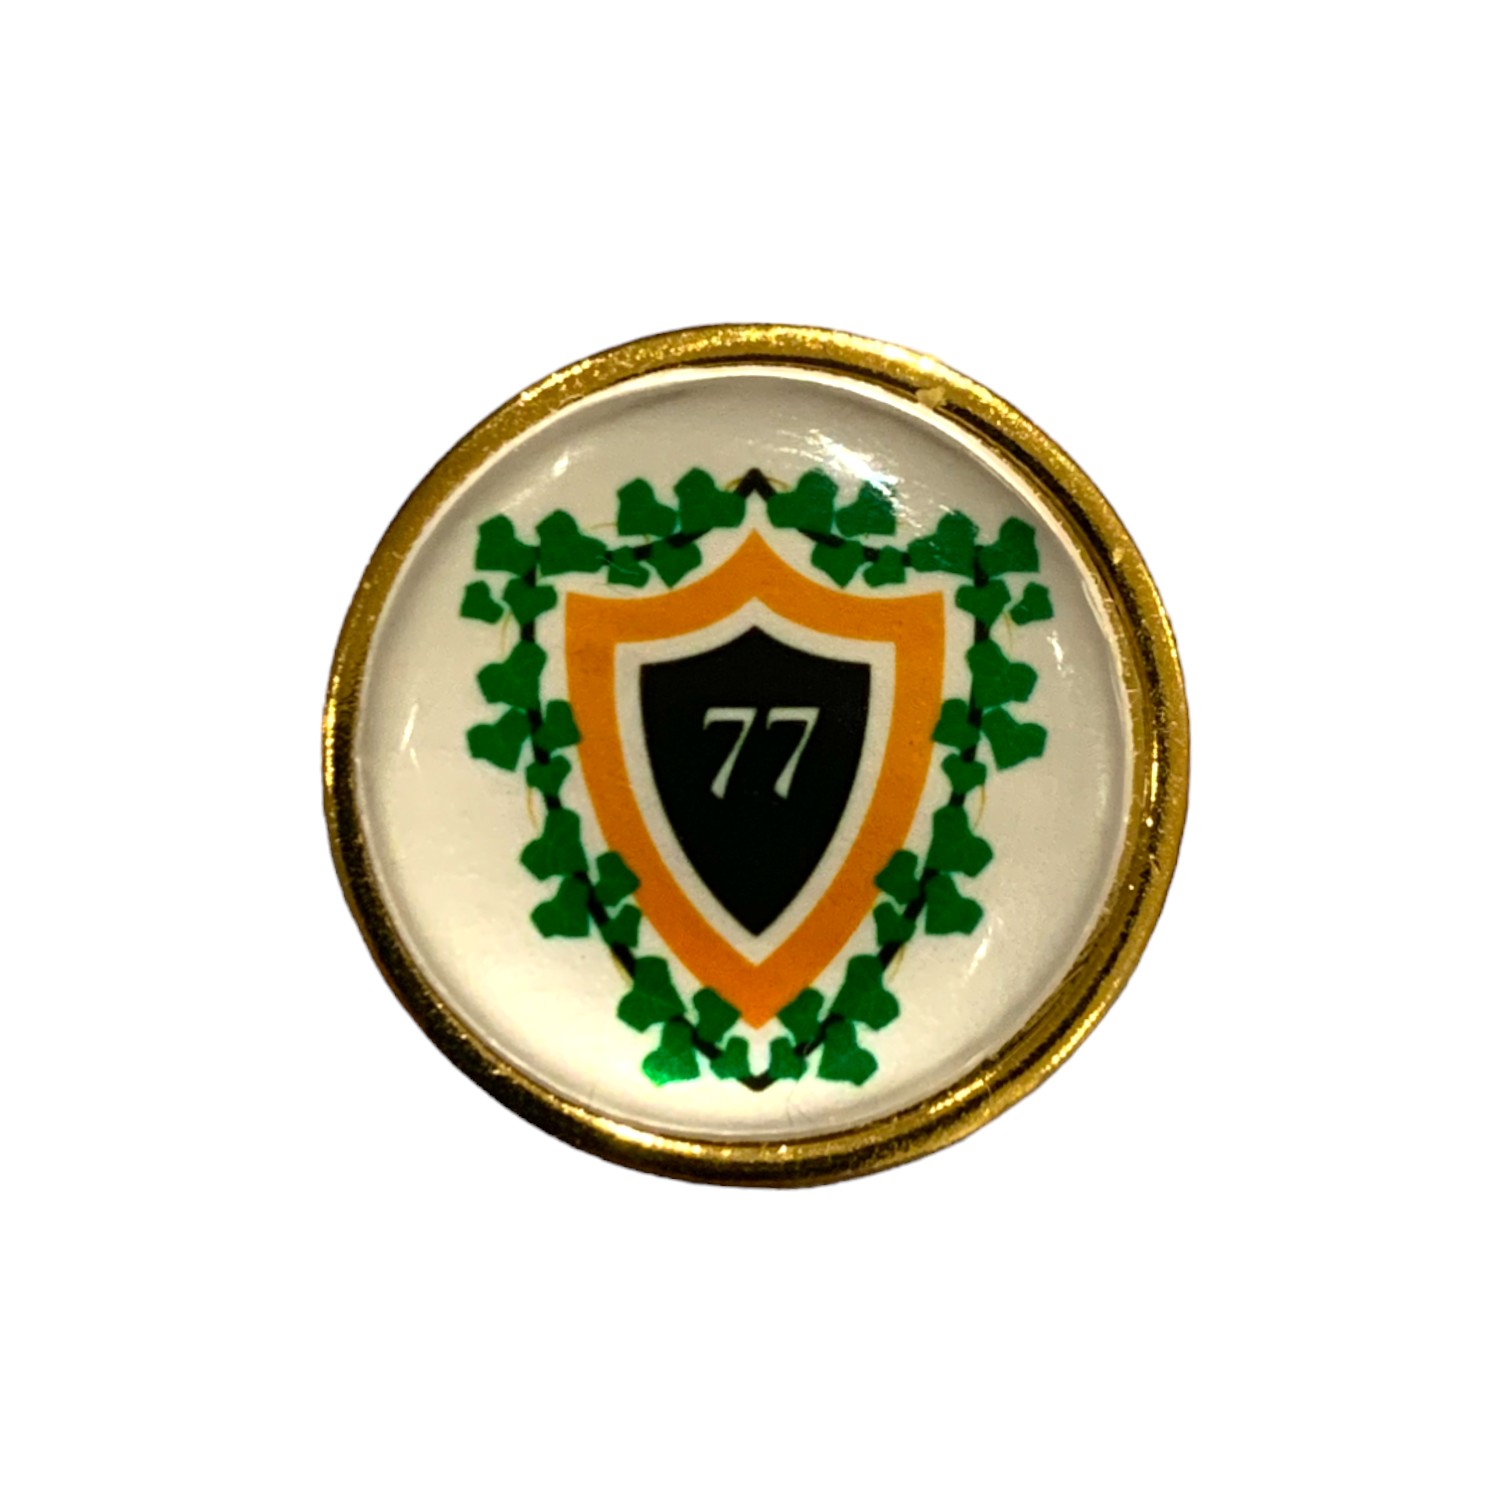 1977 - Officer Pin